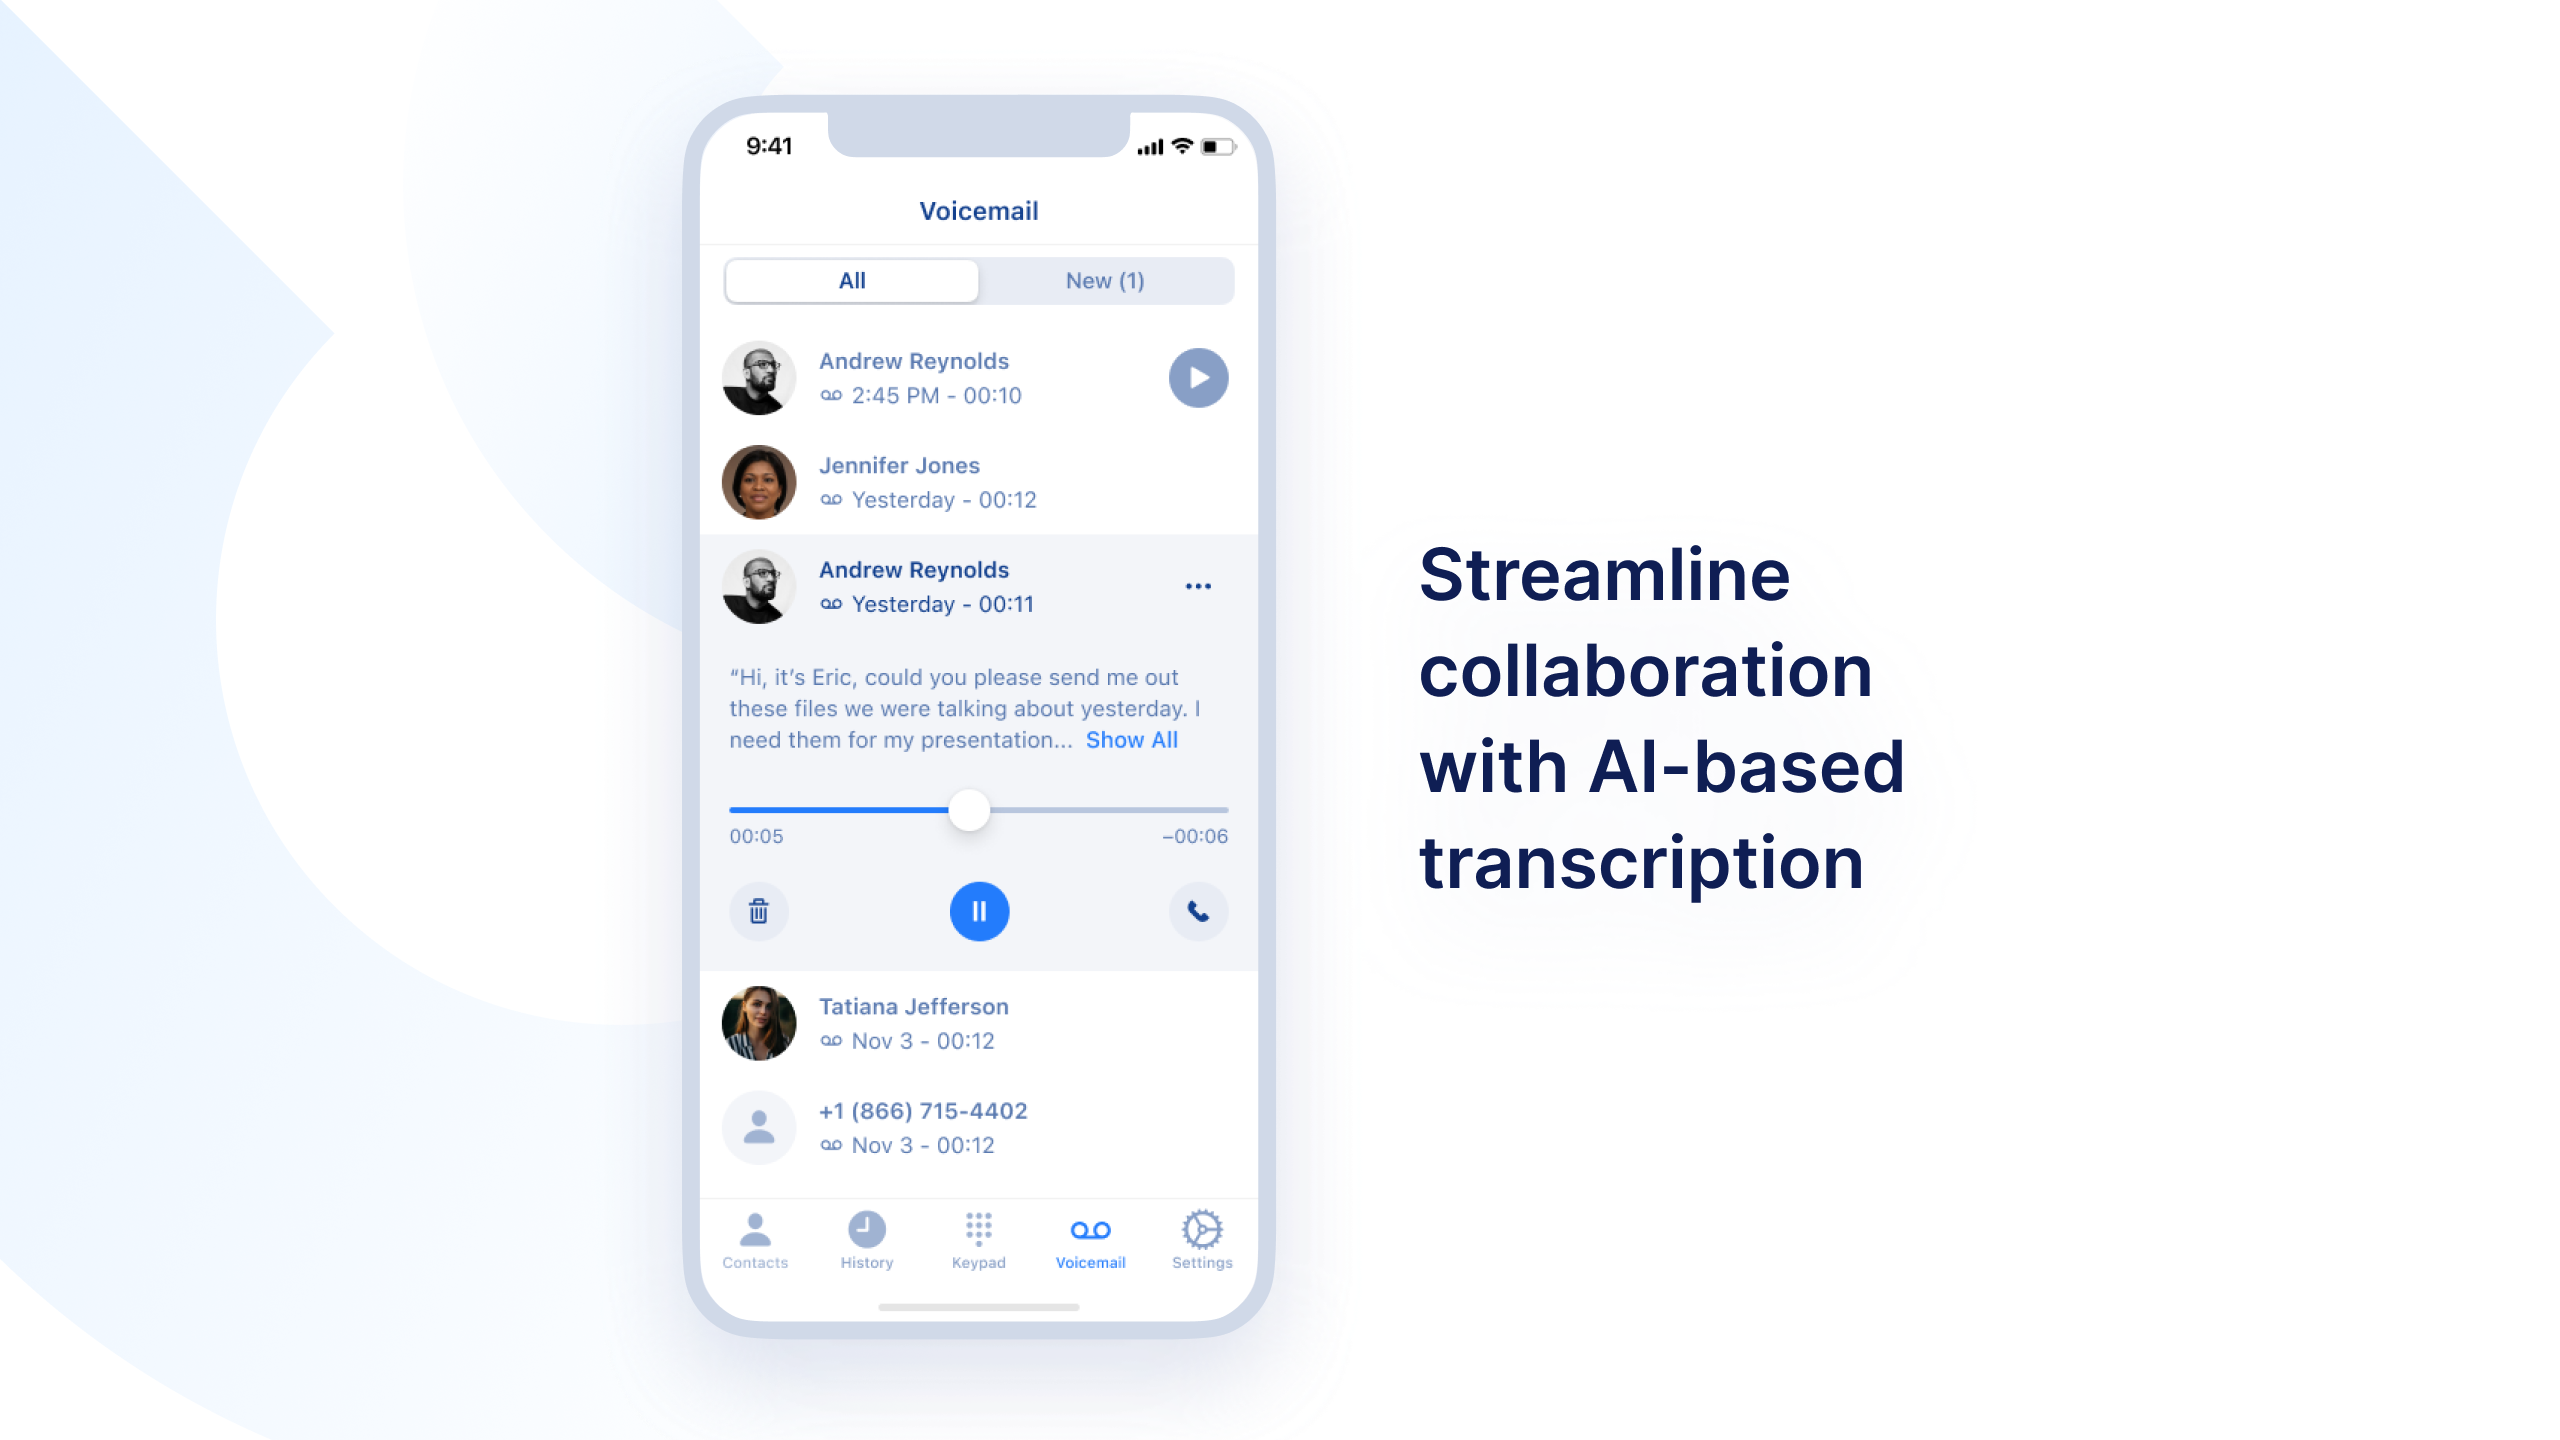 Streamline collaboration with AI-based transcription